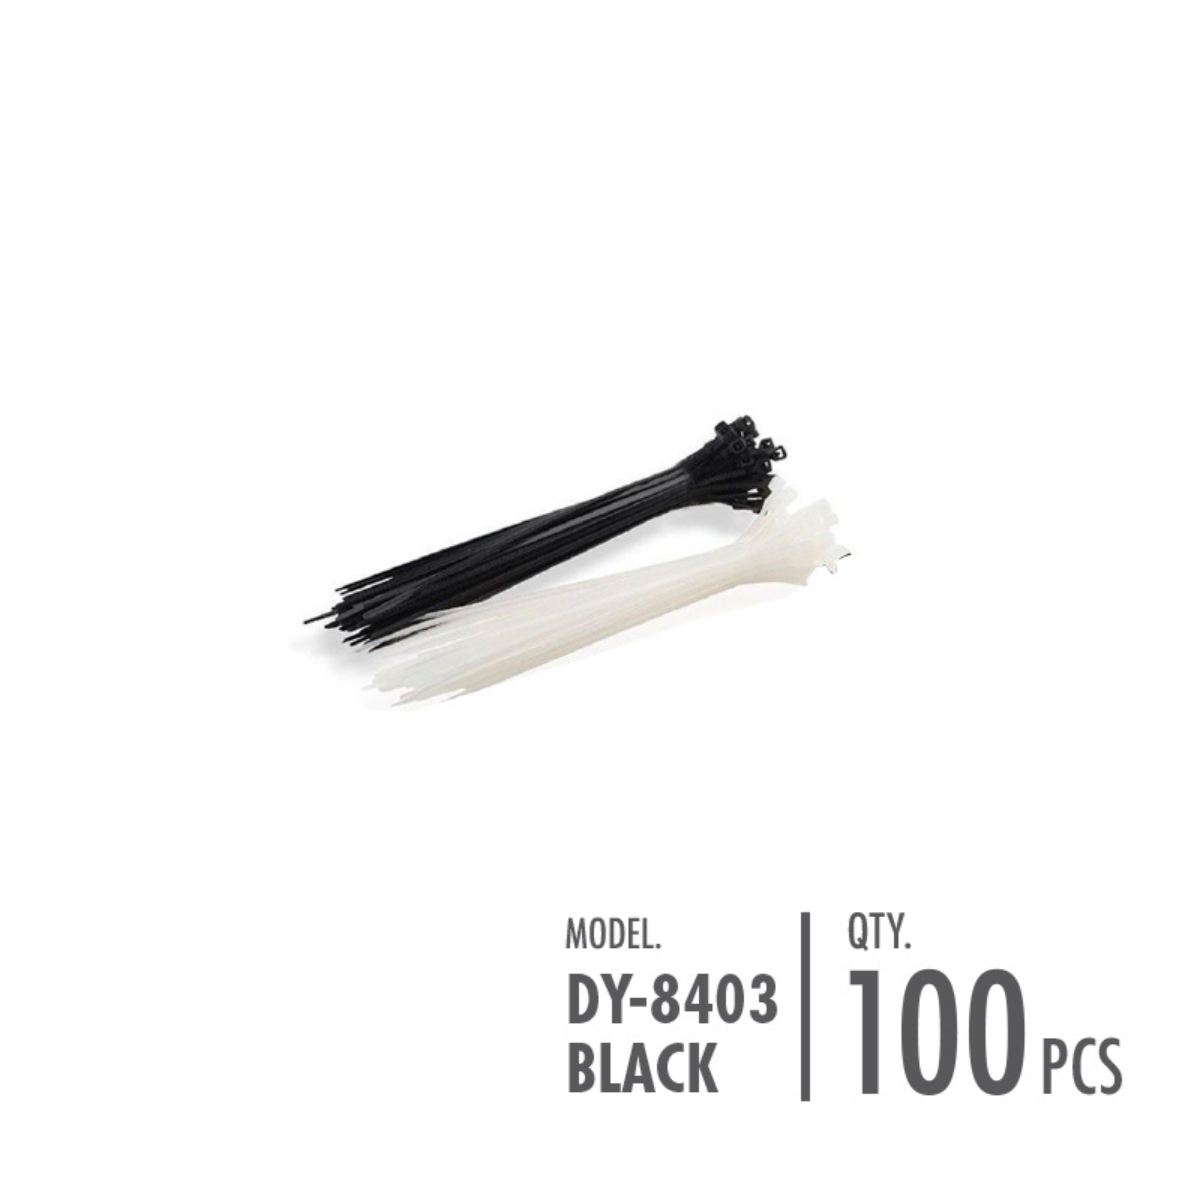 Cable Tie - Black (Dim: 0.36 x 20cm)